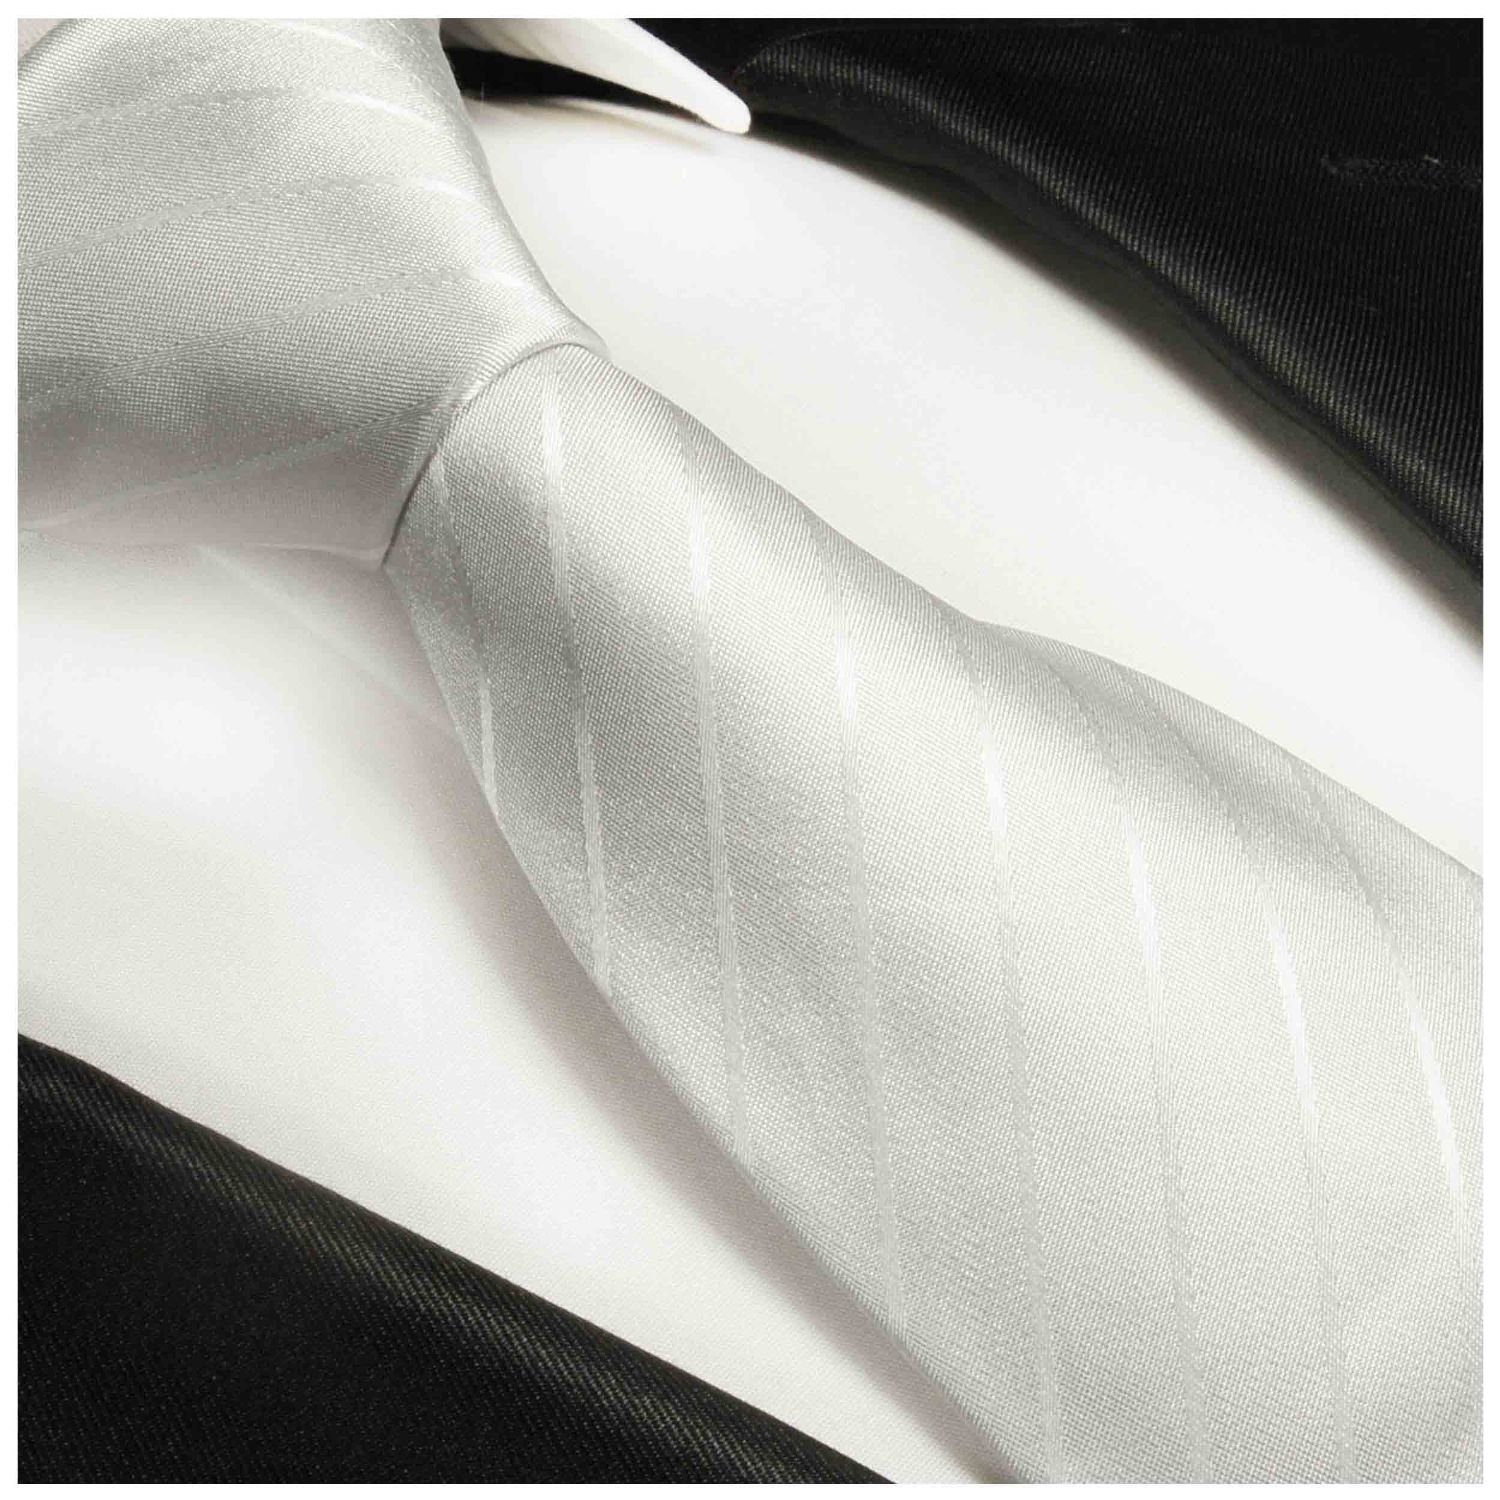 Paul Malone Krawatte Moderne Herren Seidenkrawatte 100% gestreift 992 Seide weiß Breit ivory (8cm)